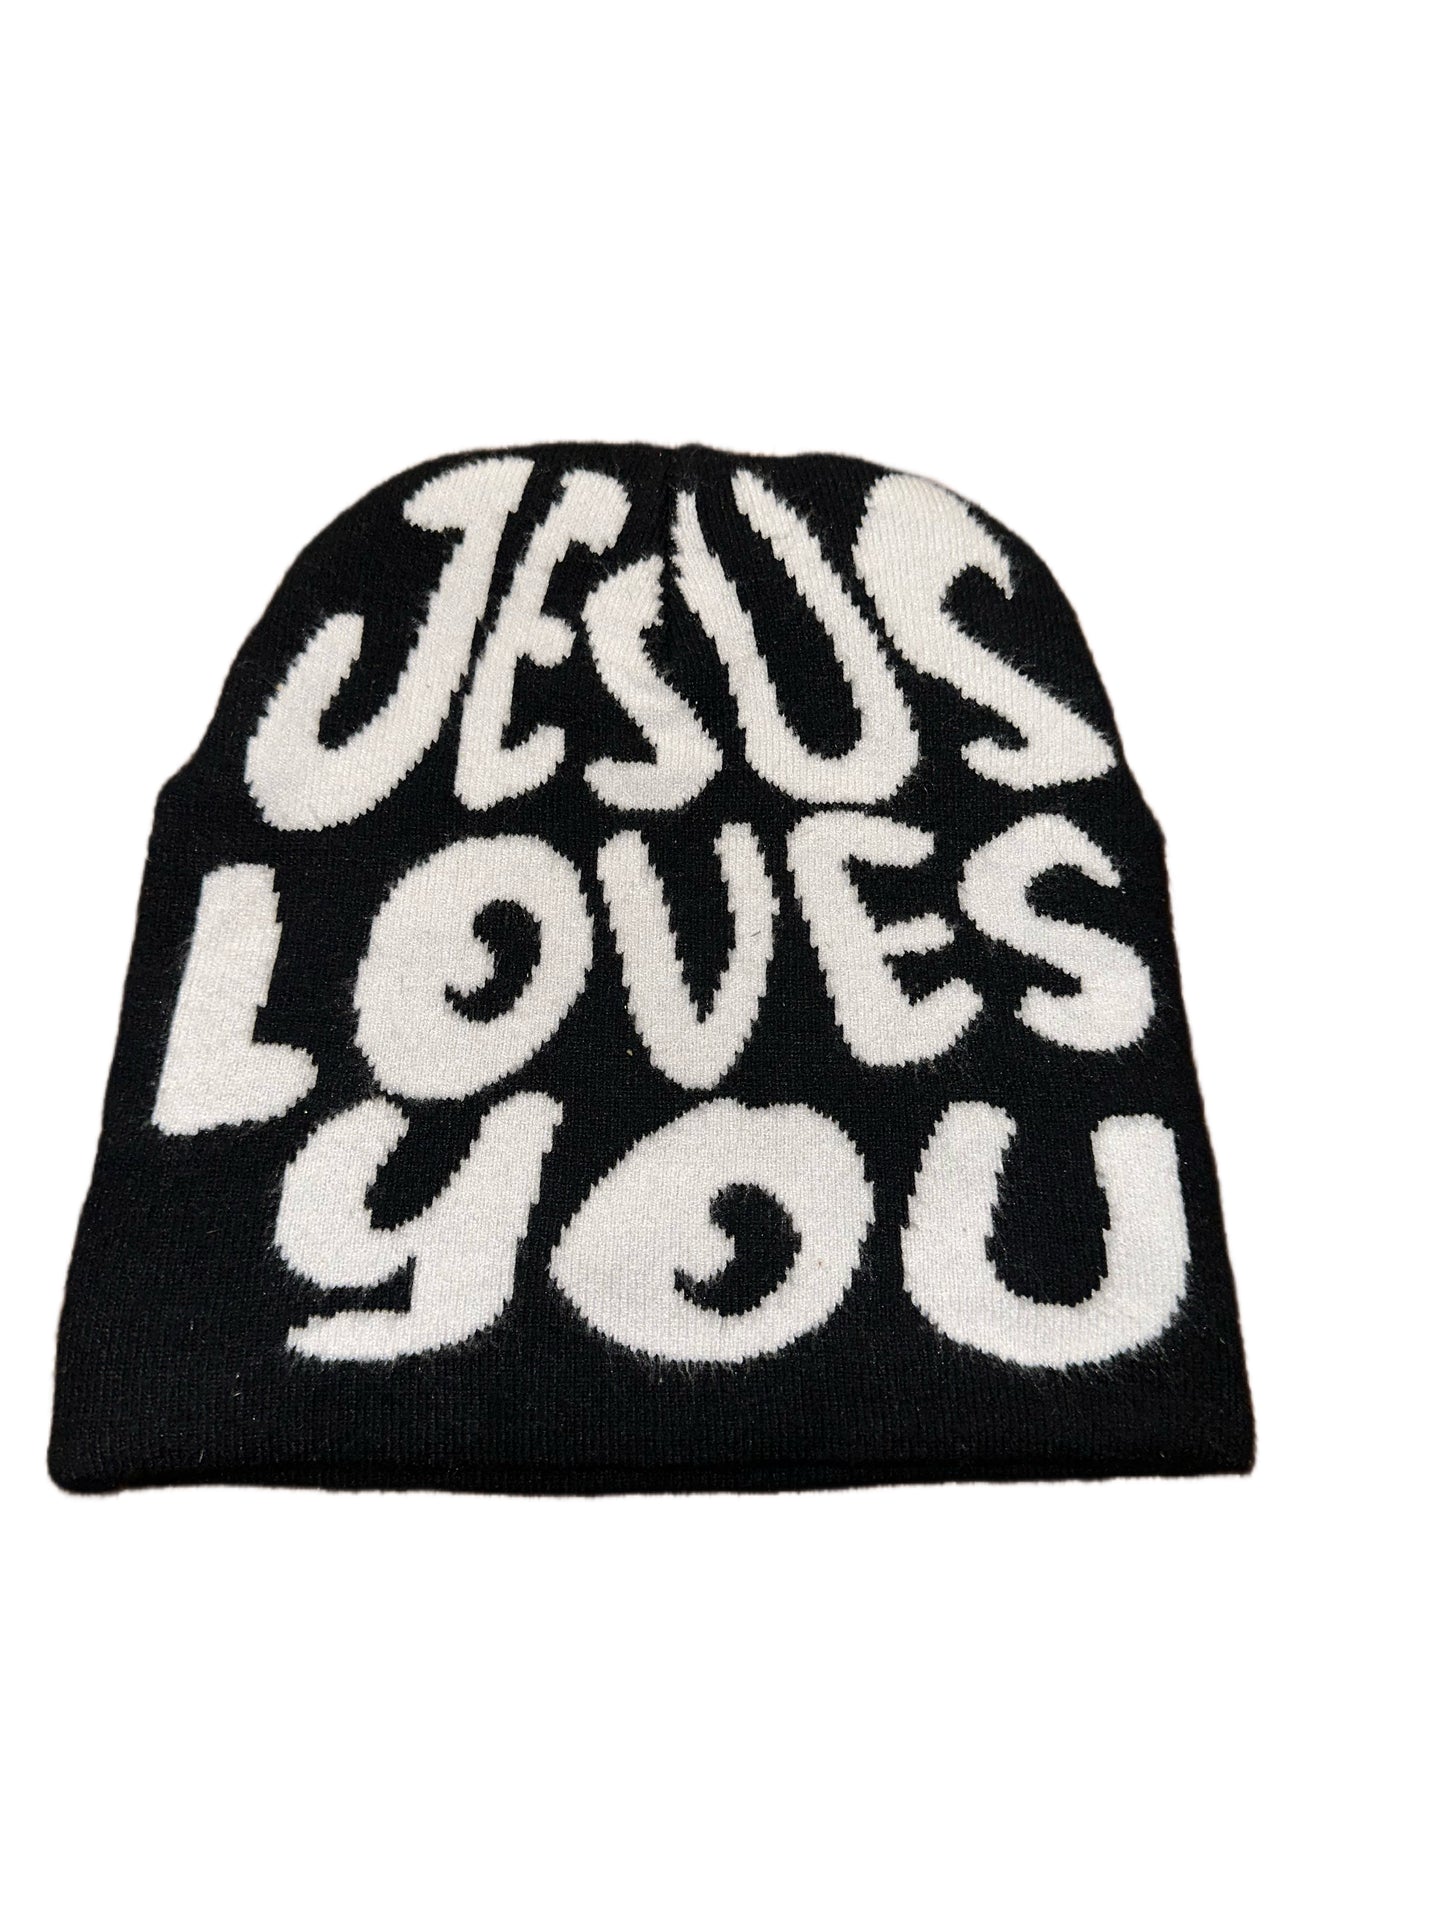 JESUS LOVES YOU BEANIE